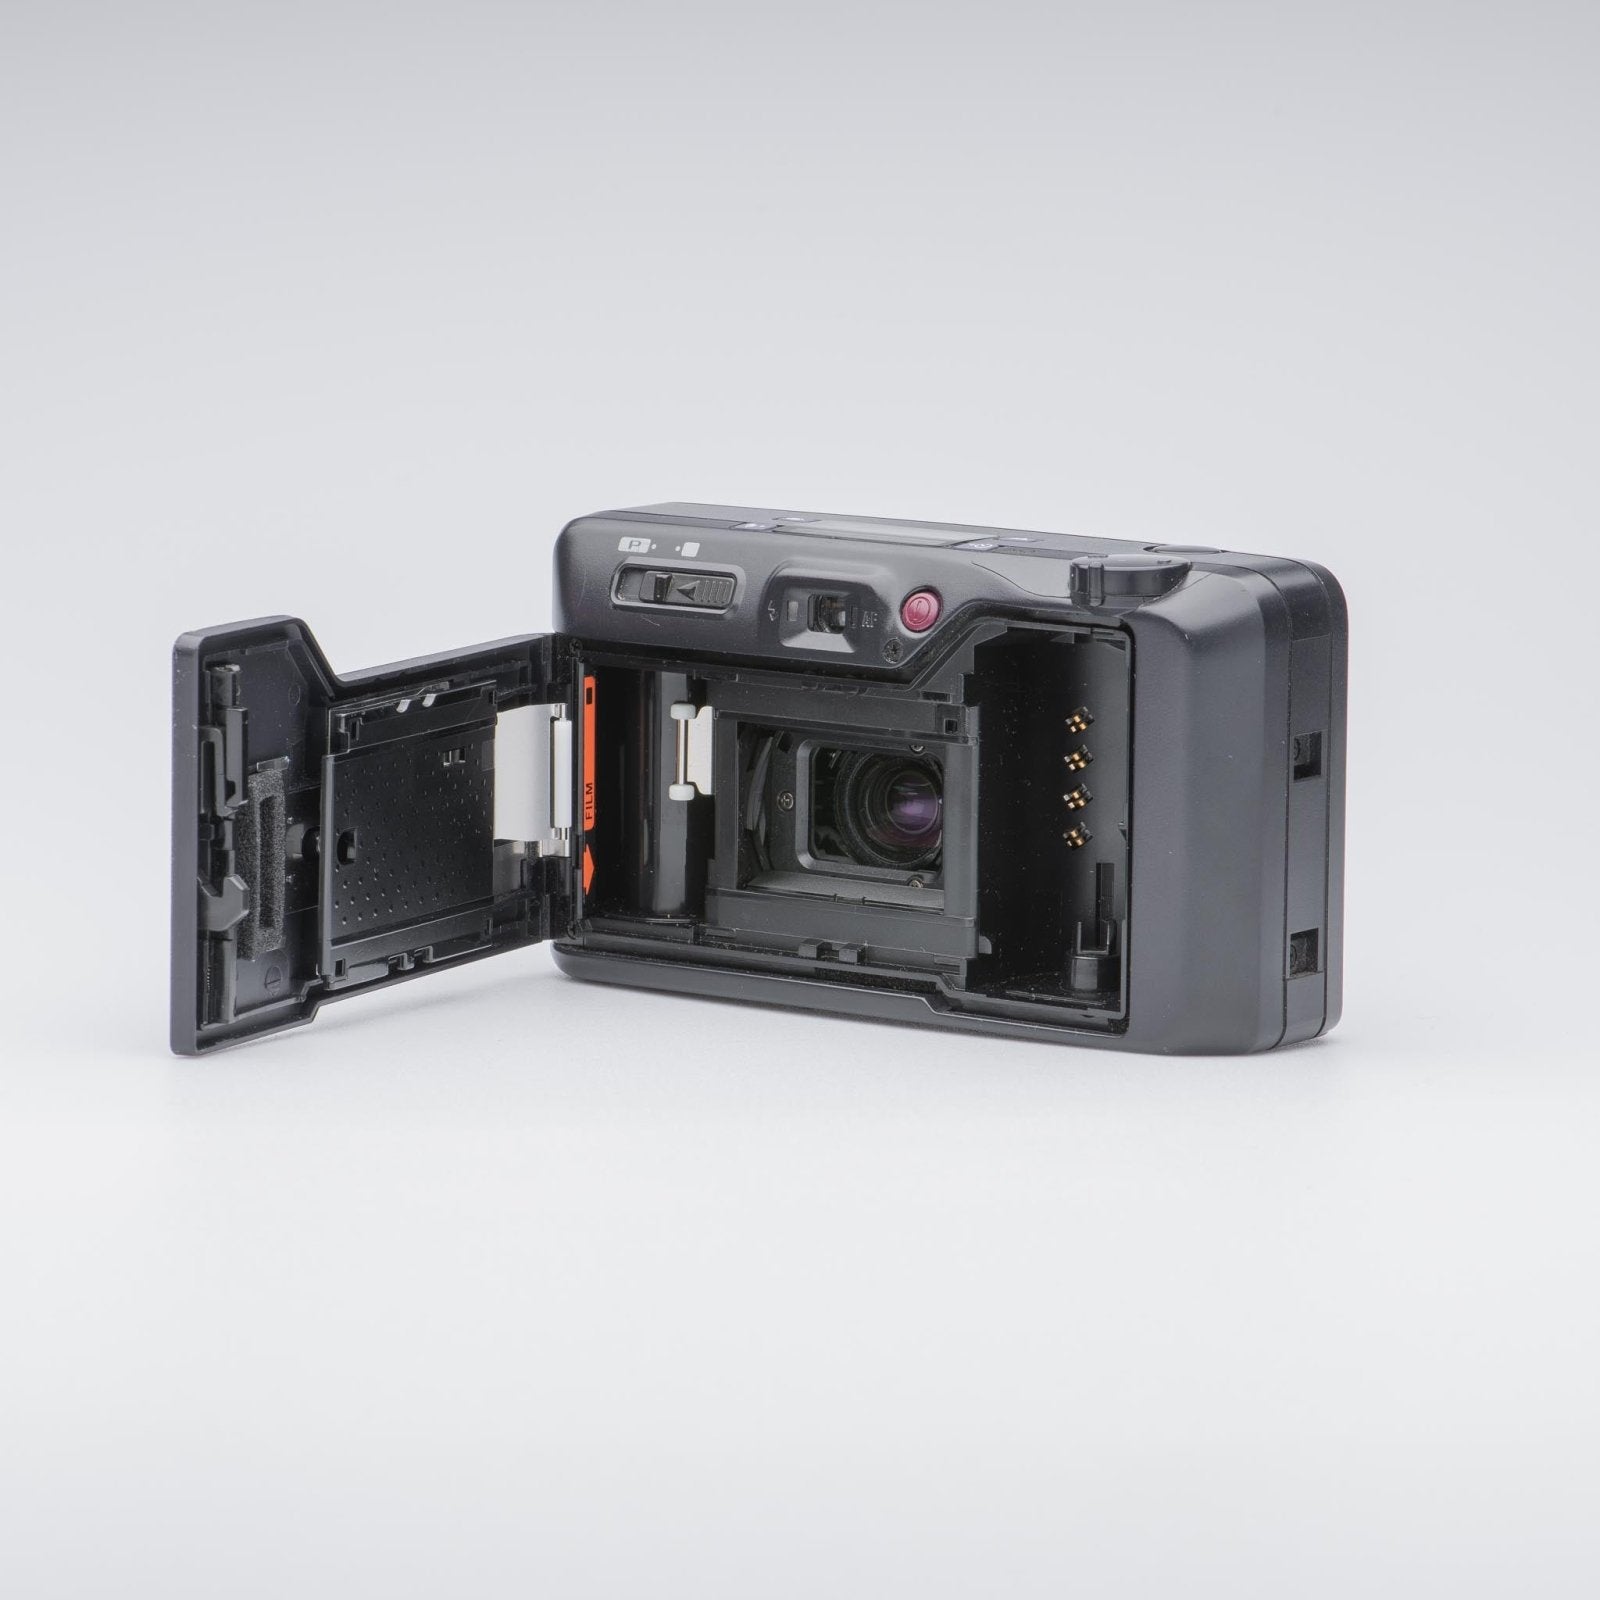 Pentax Espio P 35mm Film Camera - Camera Kangaroo